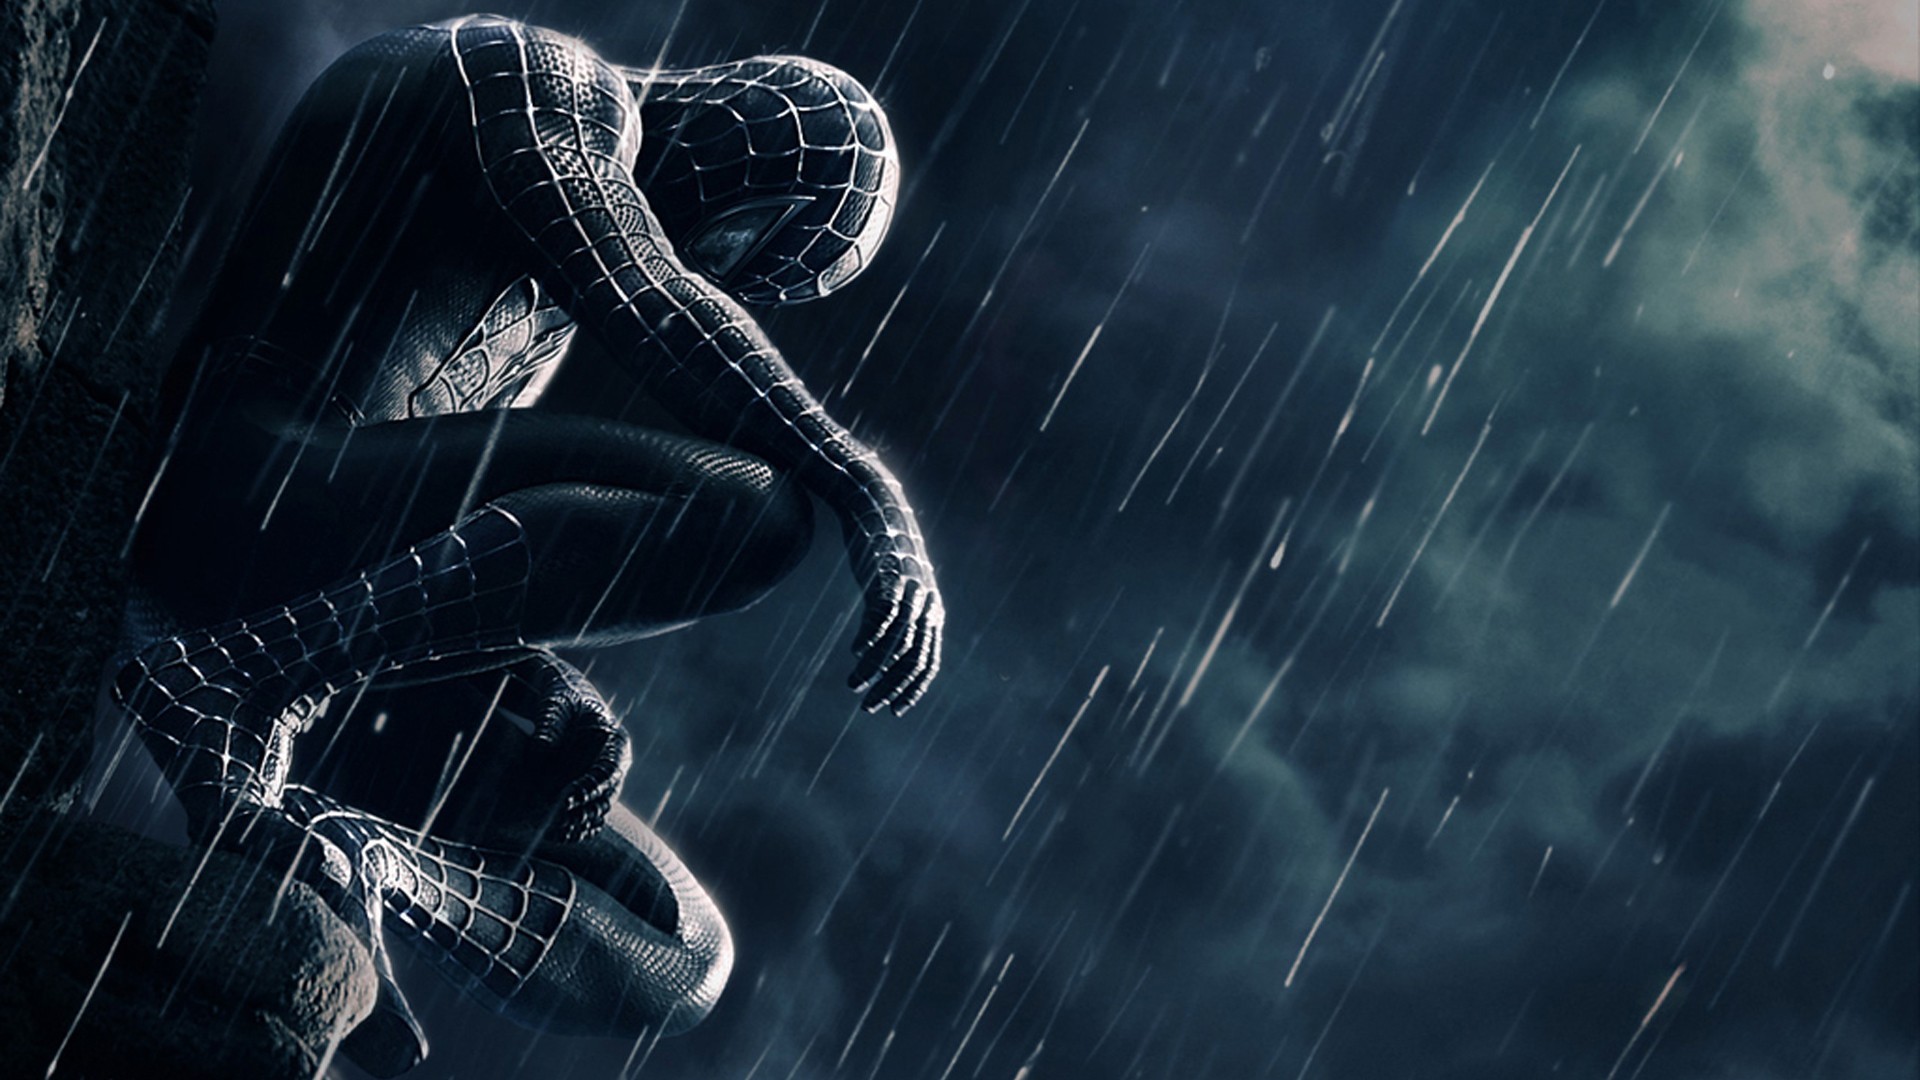 HD Black Spiderman 3 Wallpaper 1080p - HiReWallpapers 10570